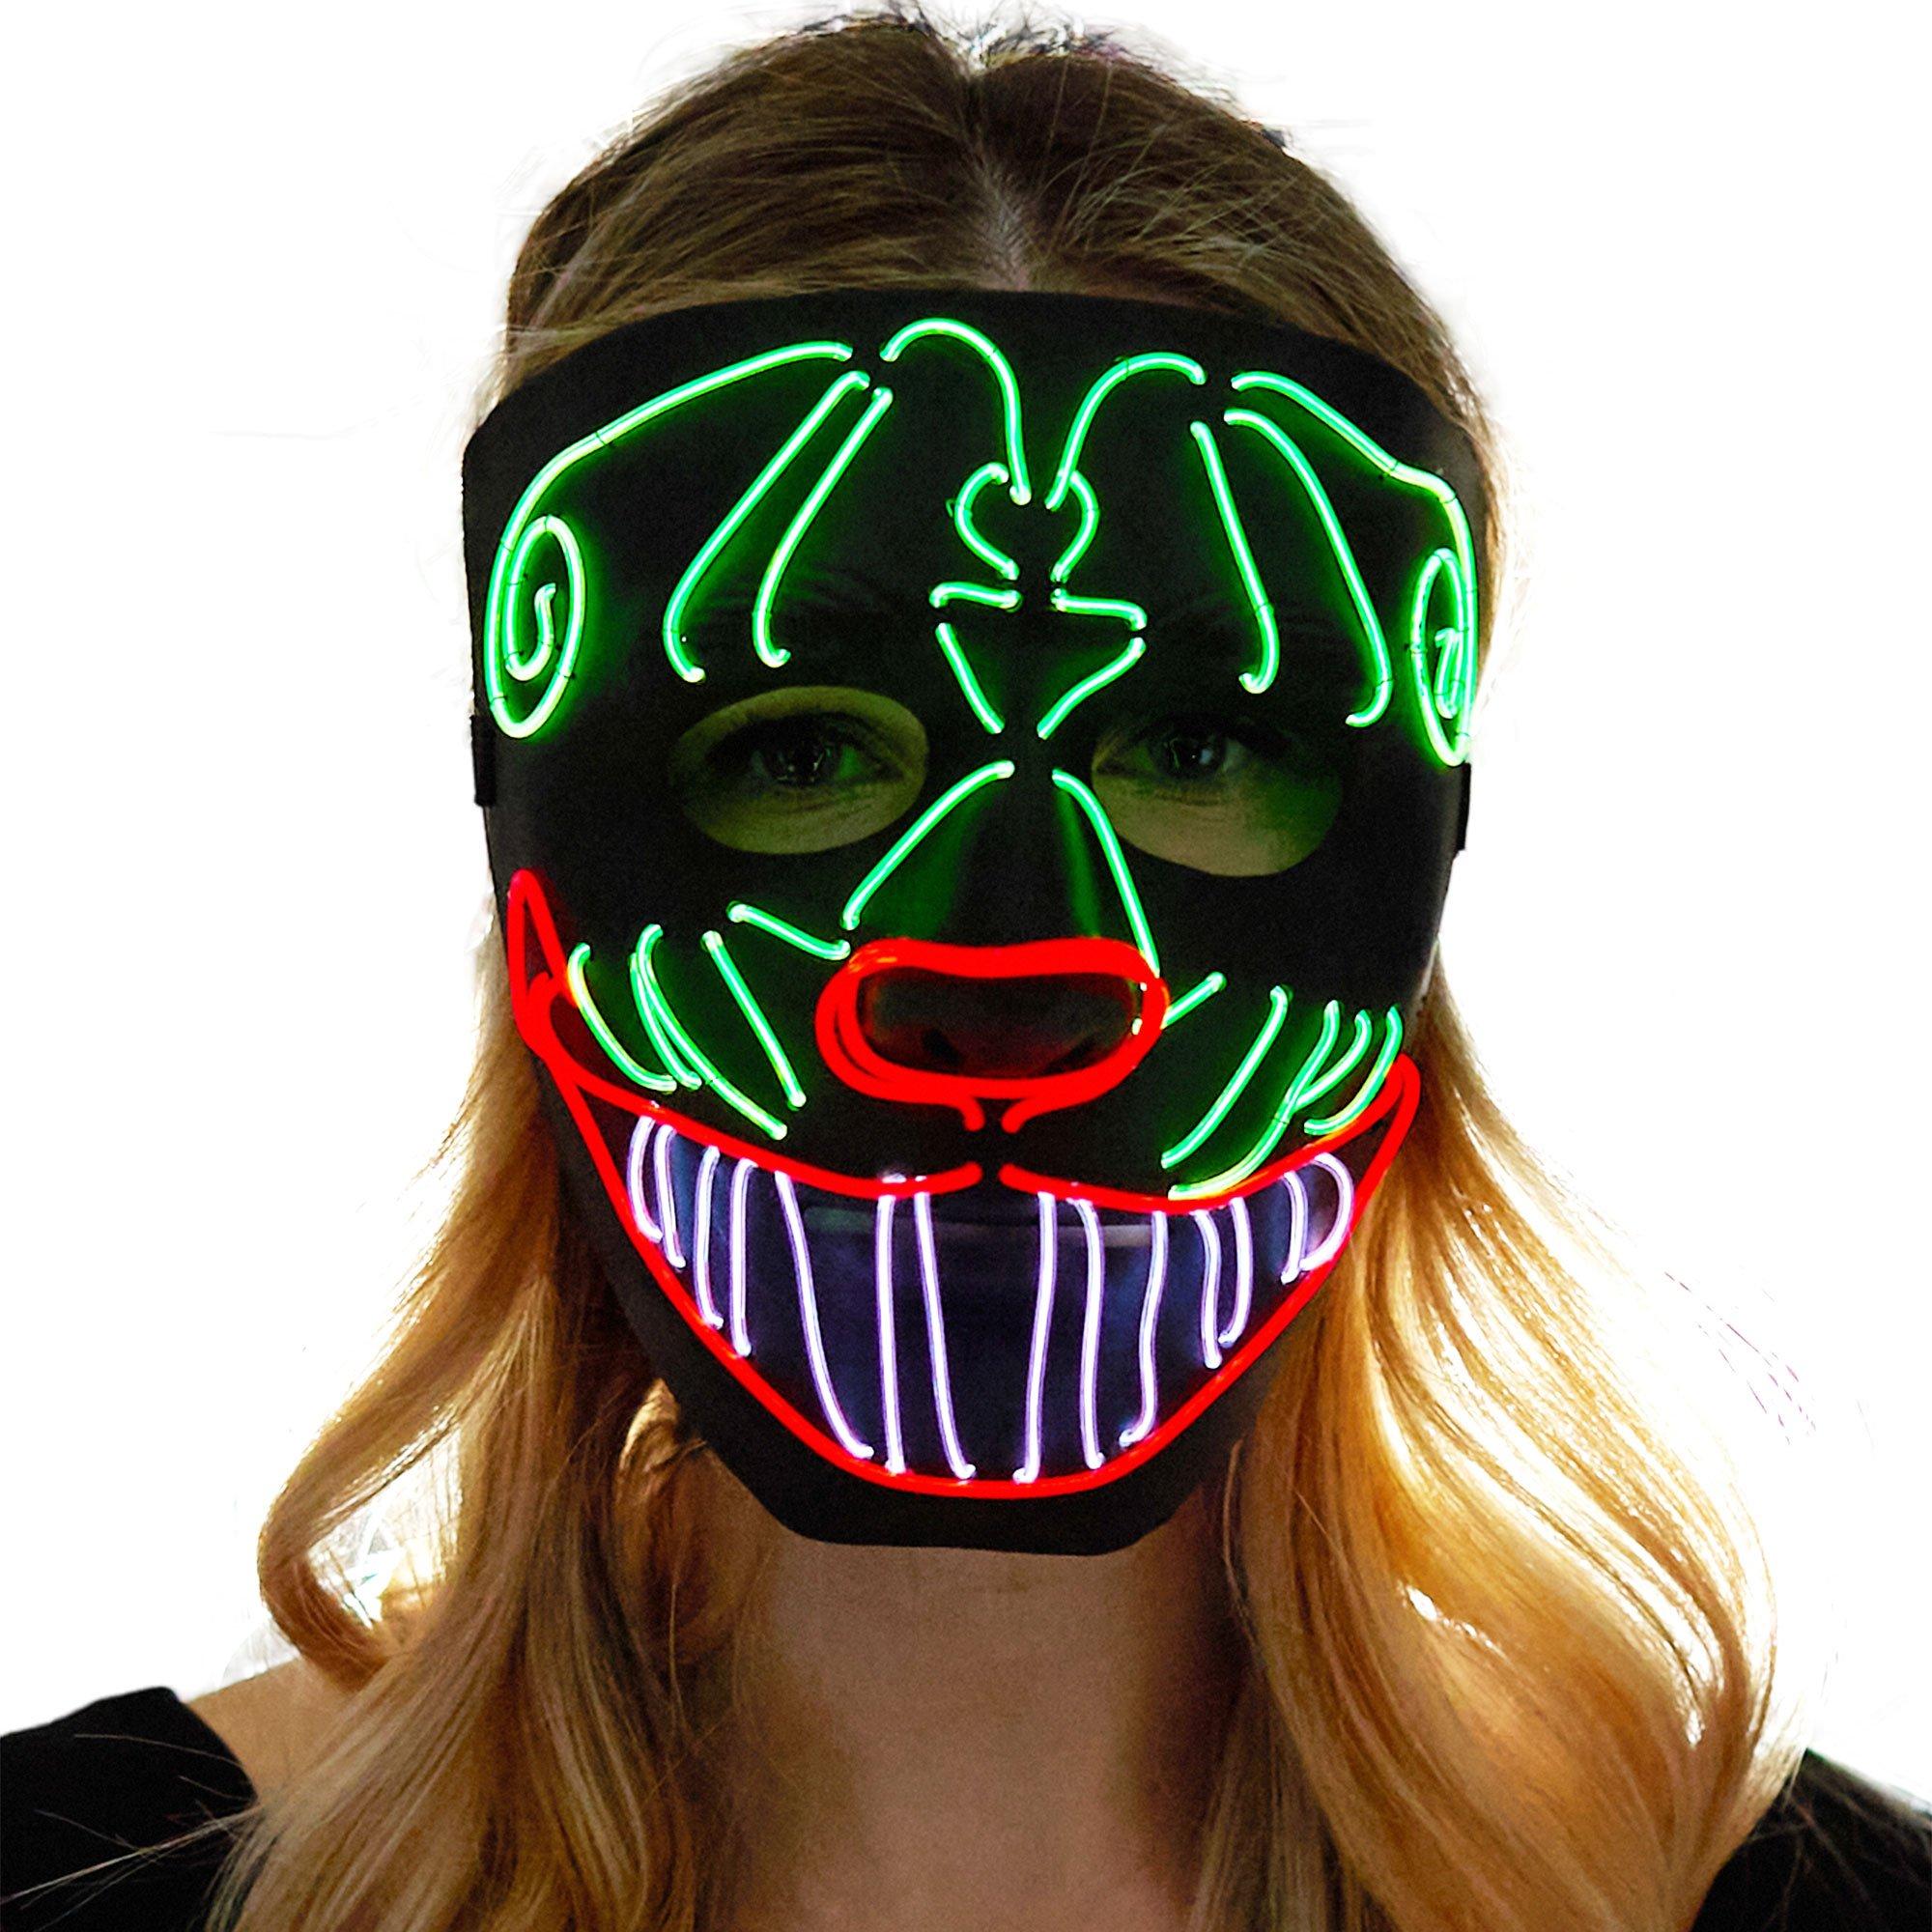 10+ Light Up Face Mask